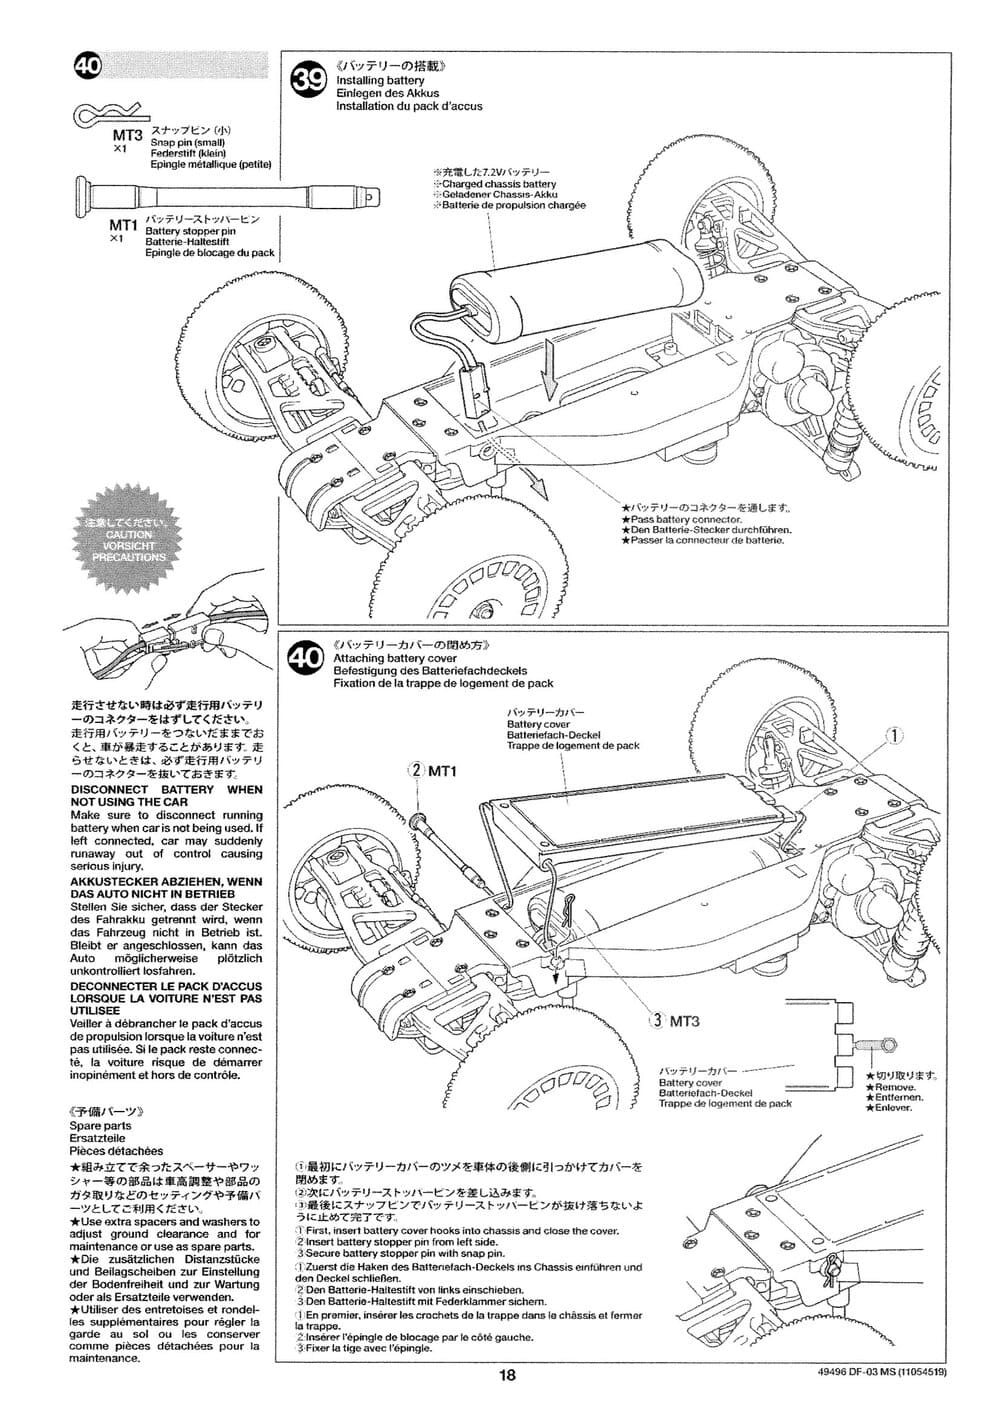 Tamiya - DF-03 MS Chassis Chassis - Manual - Page 18